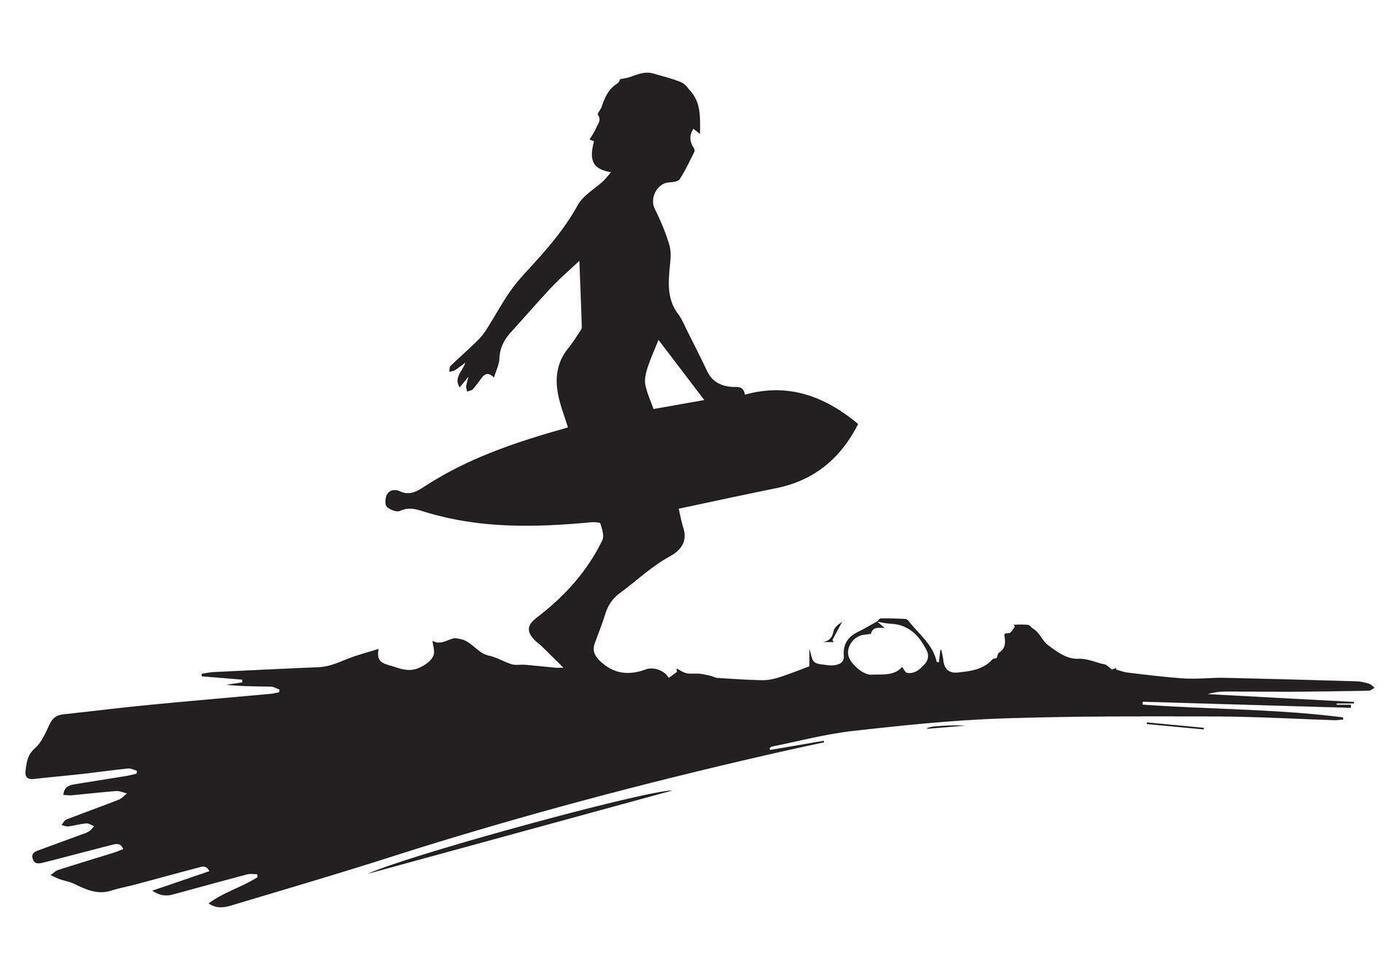 Surfing Silhouette design white background pro vector